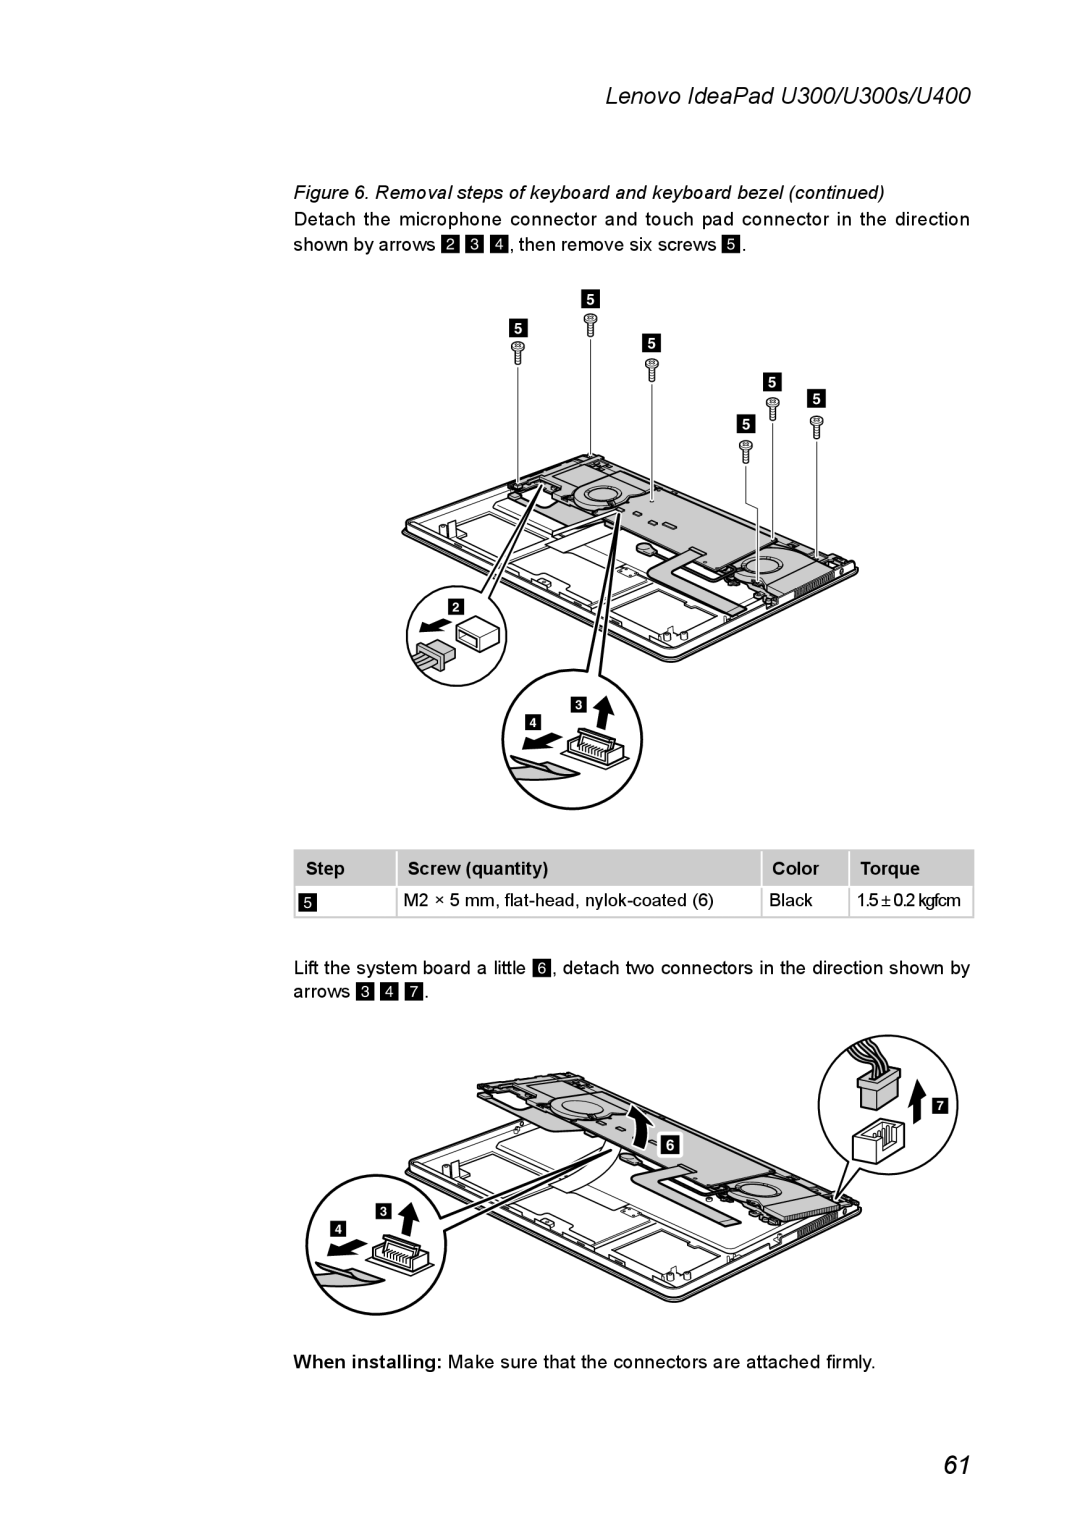 Lenovo U300S manual Removal steps of keyboard and keyboard bezel continued, Lenovo IdeaPad U300/U300s/U400 